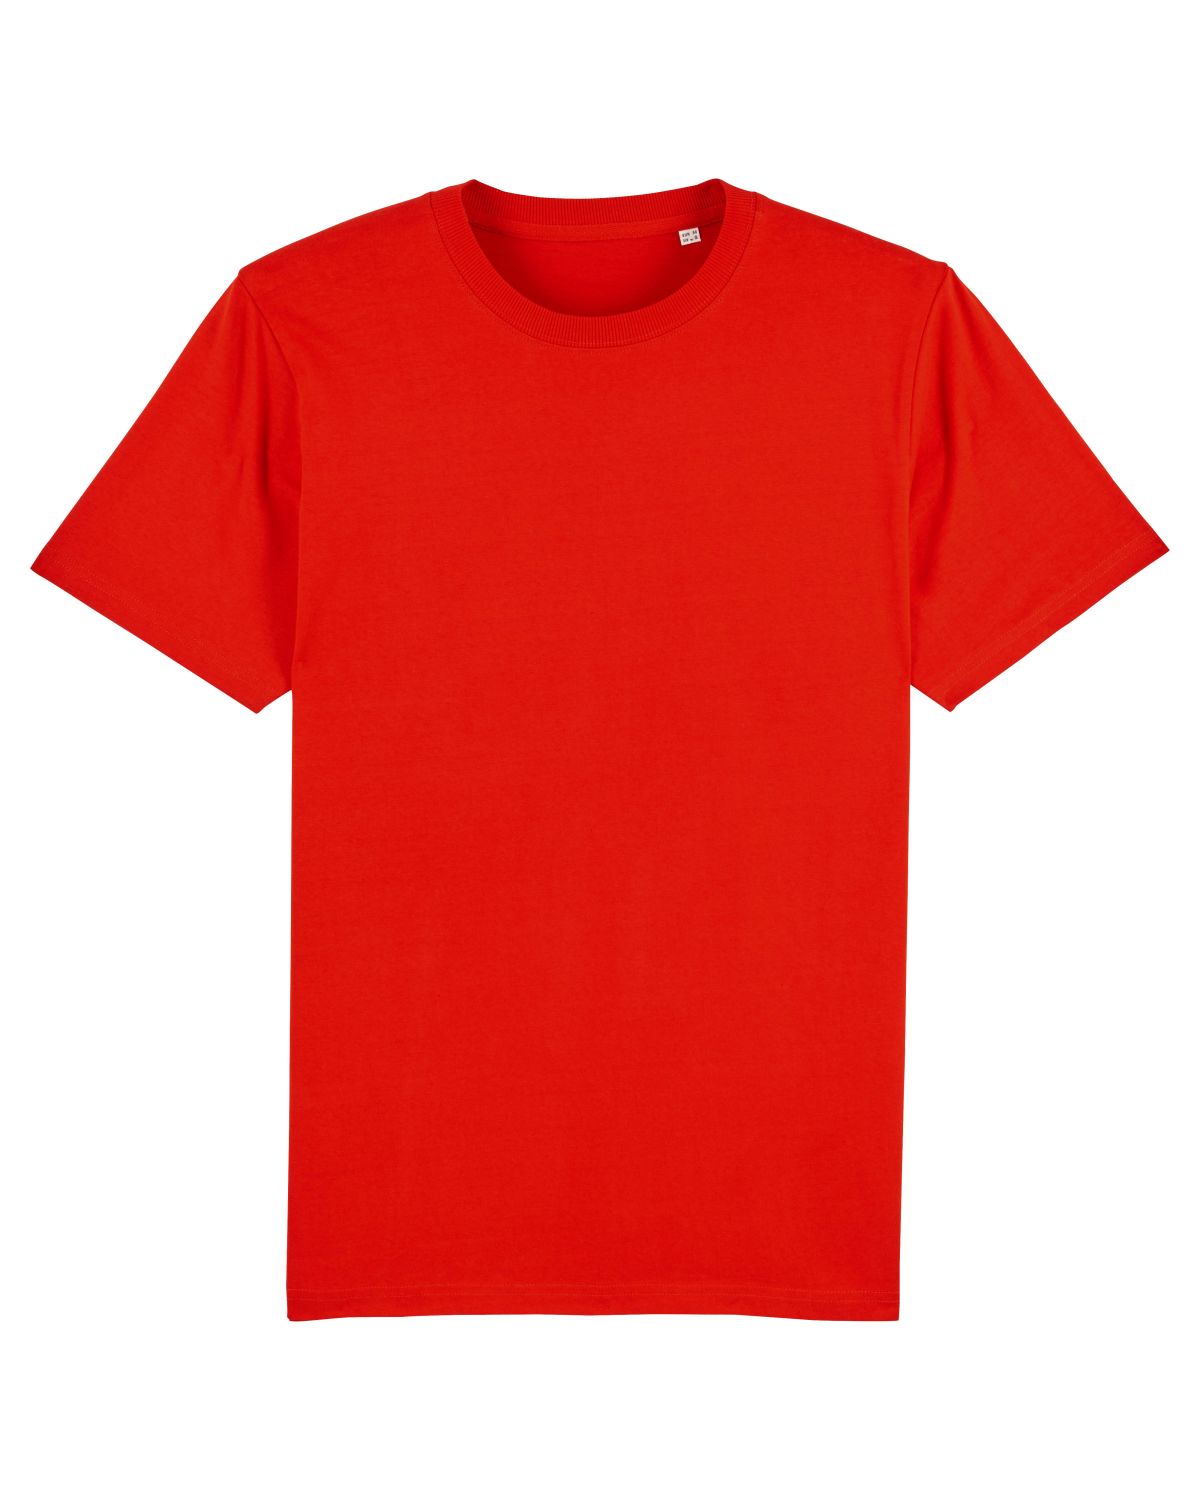 Stanley/Stella's - Sparker T-shirt - Bright Red